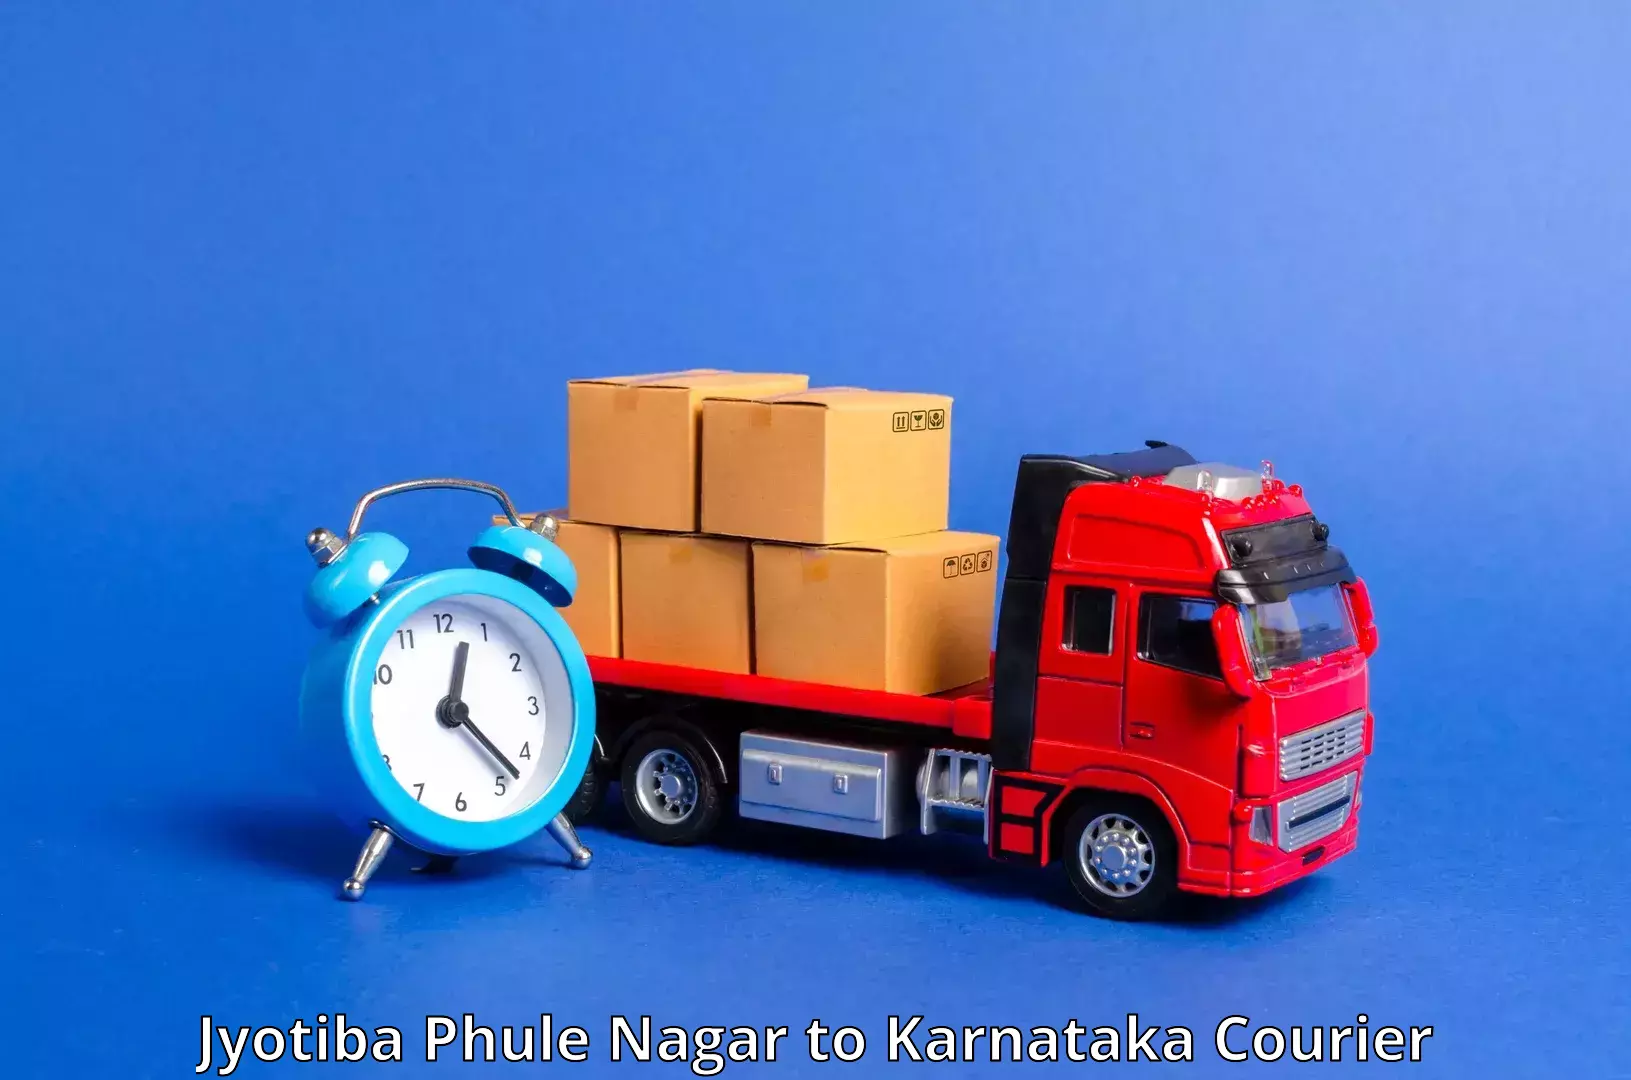 End-to-end delivery in Jyotiba Phule Nagar to Karnataka